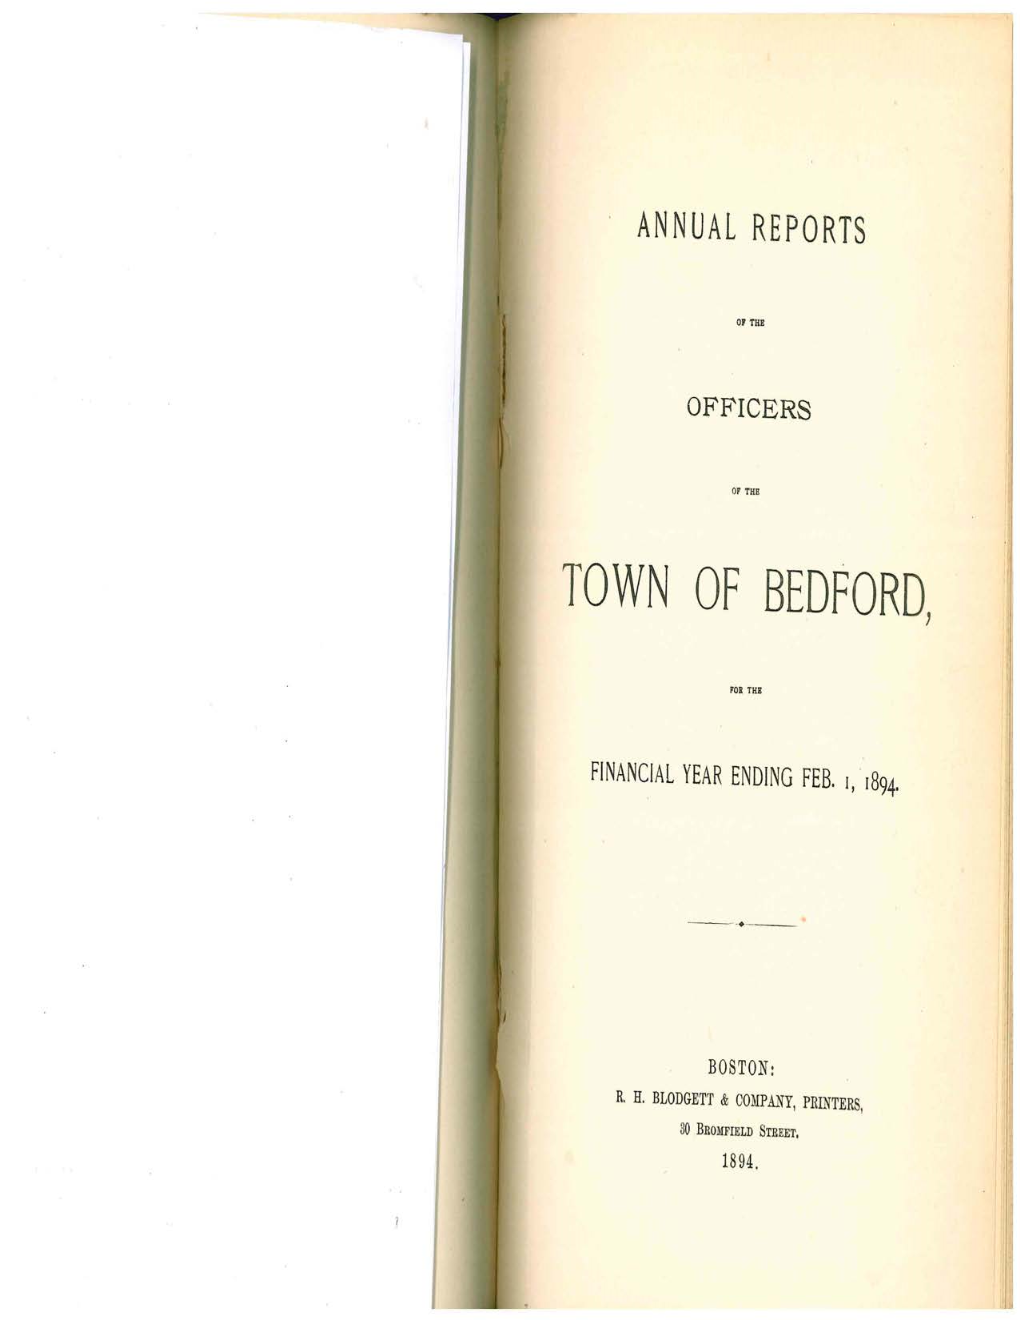 Annual Report 1893-1894